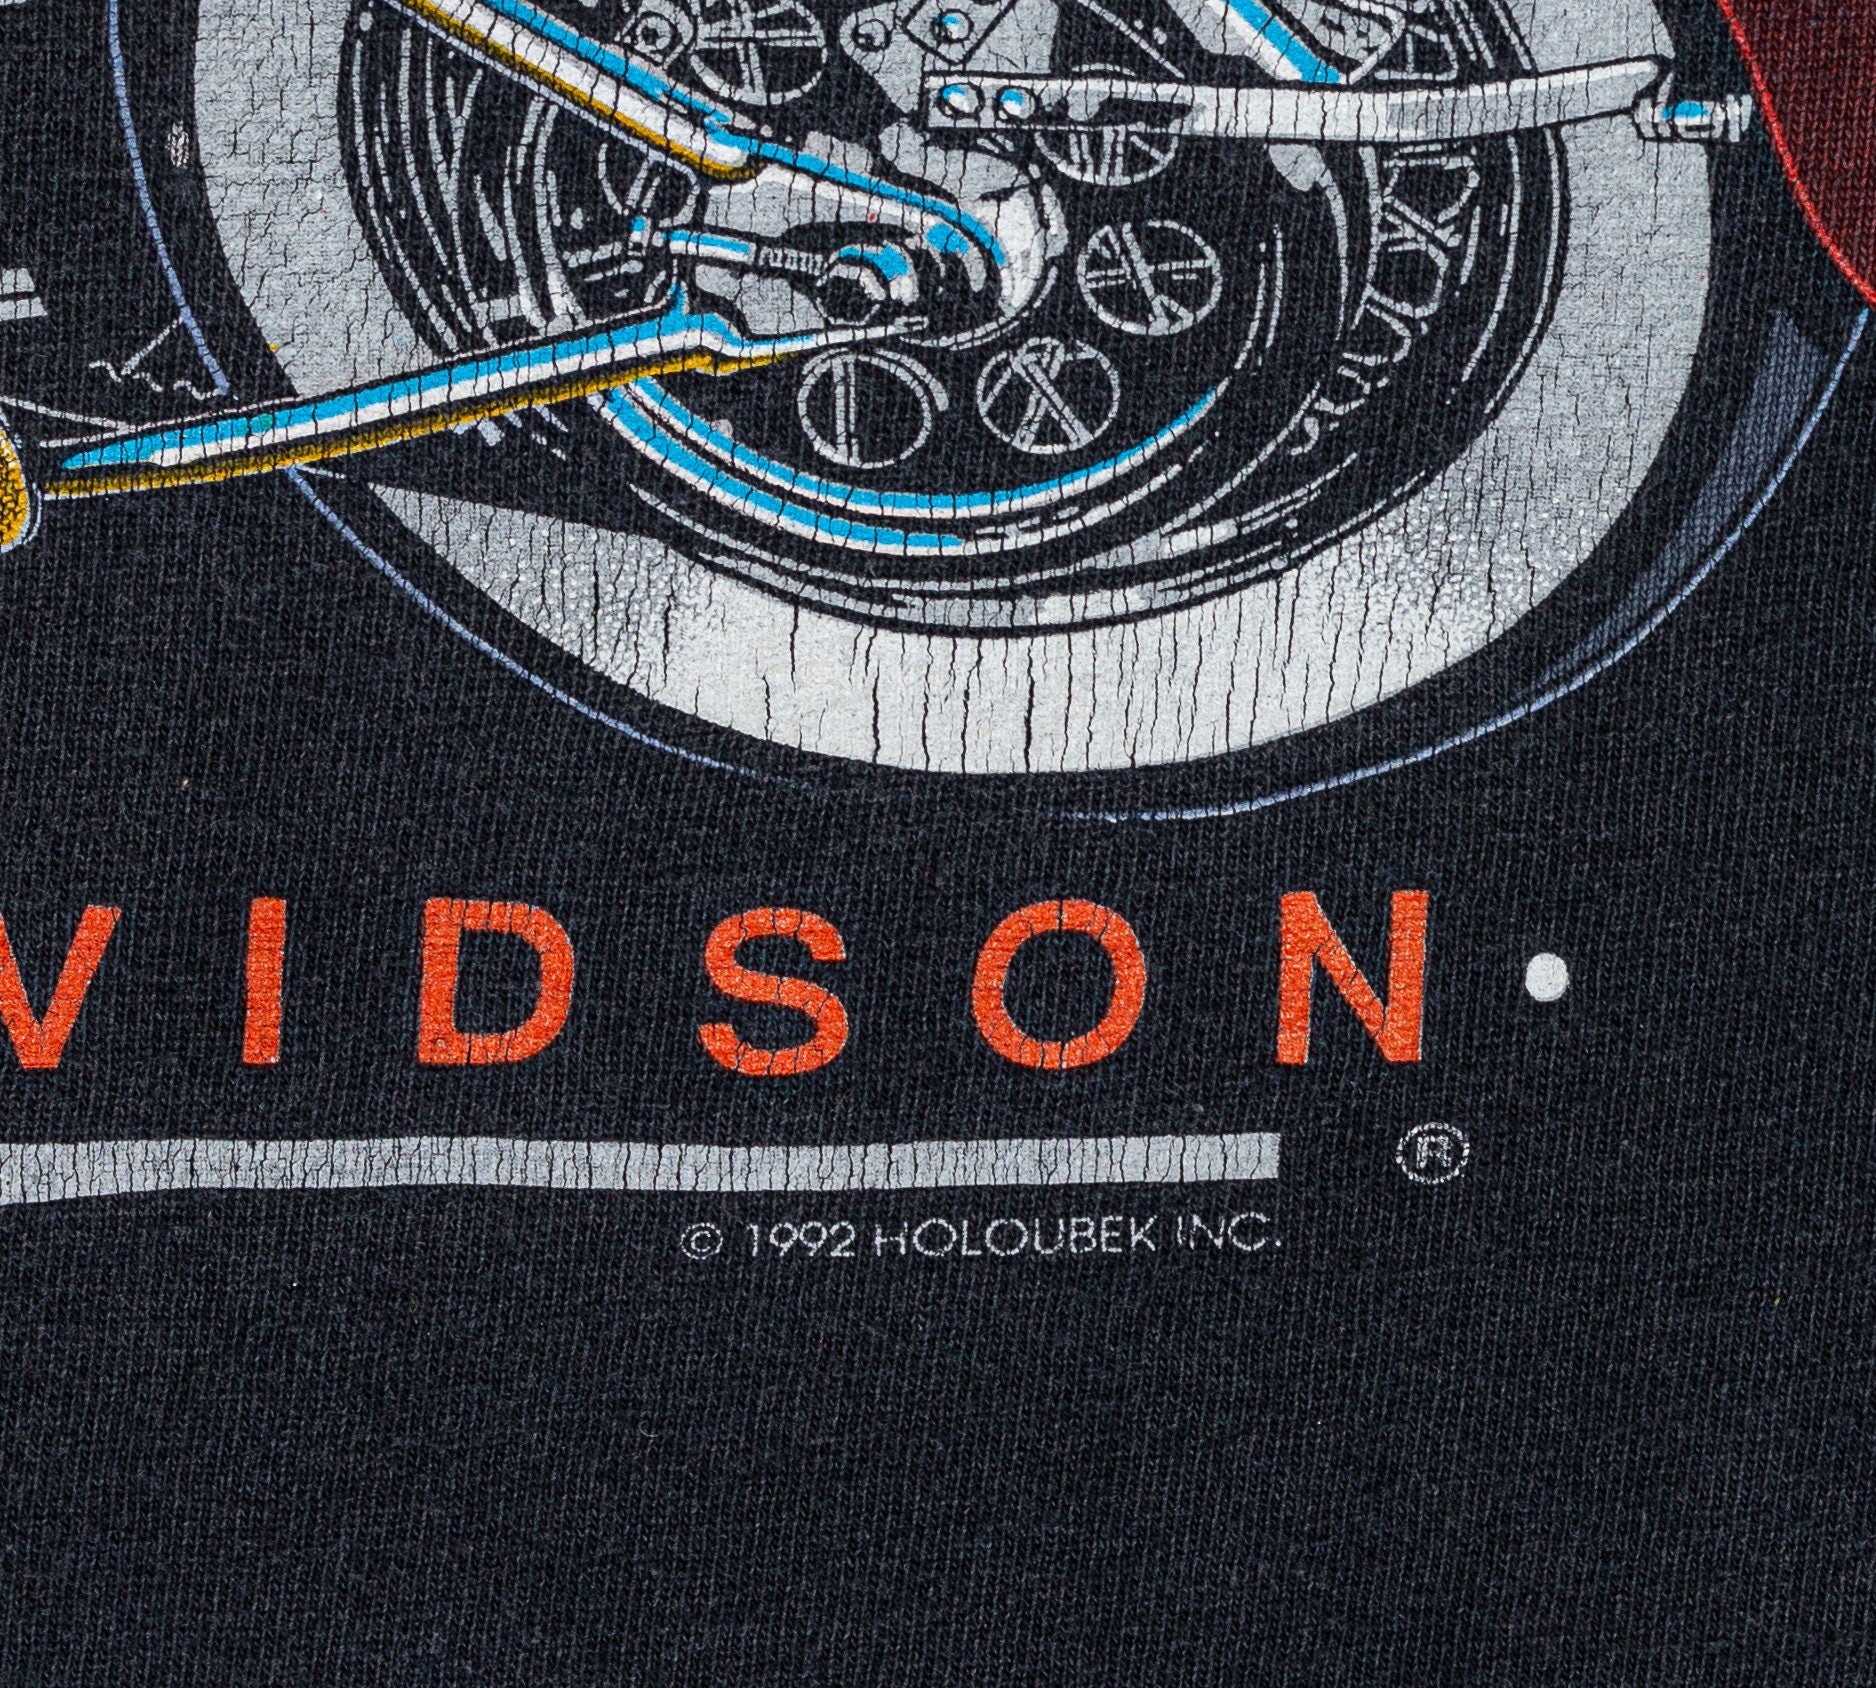 90s Harley Davidson "Accessorize Til It Hurts" T Shirt - Men's XXL 